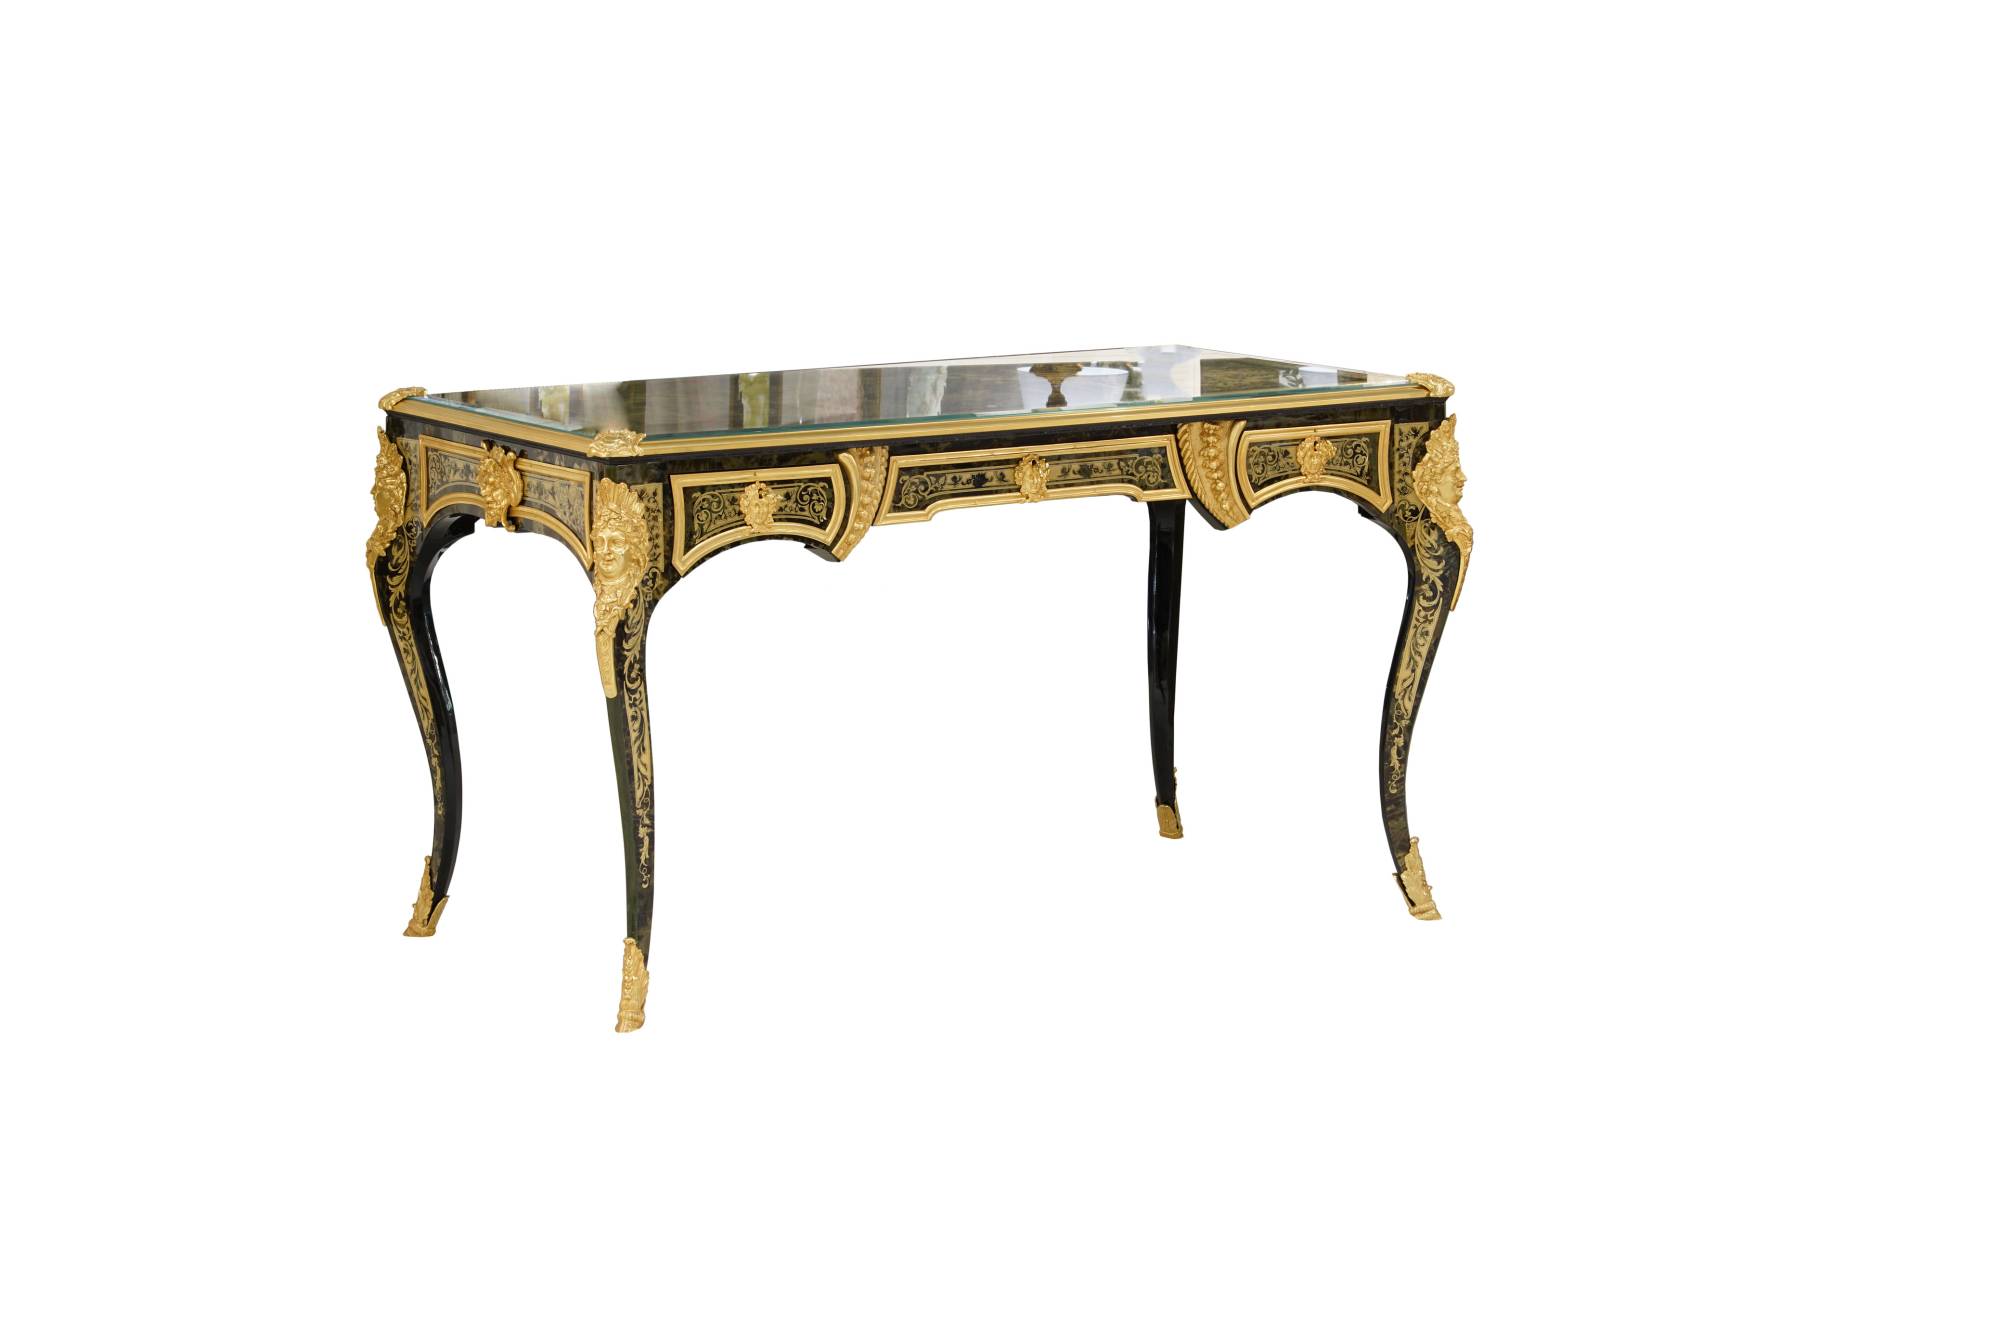 ART. 2196 – C.G. Capelletti Italian Luxury Classic Desks and writing desks. Made in Italy classic interior design